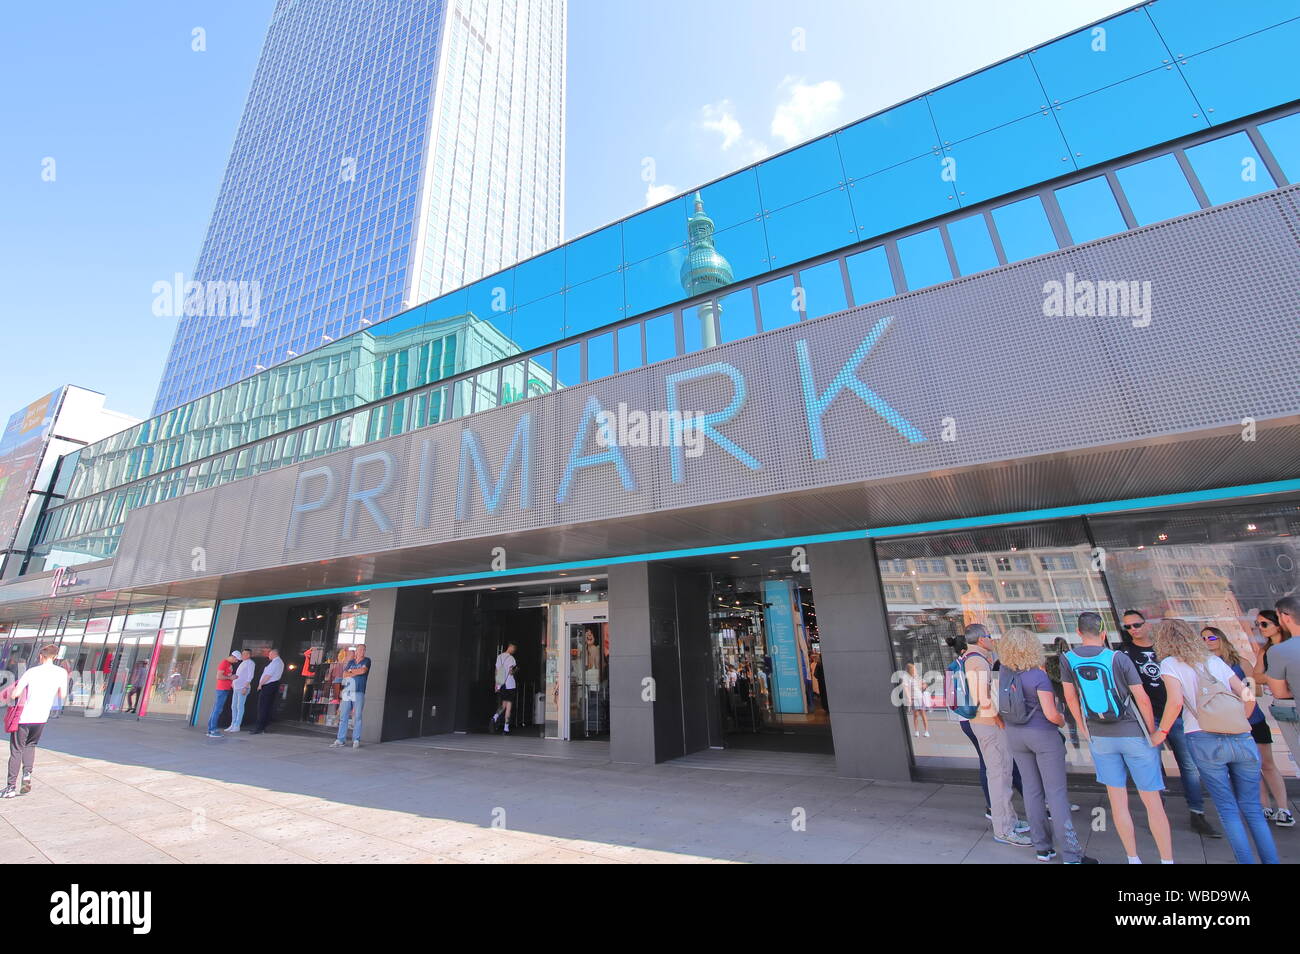 Primark shopping mall Berlin Germany Stock Photo - Alamy